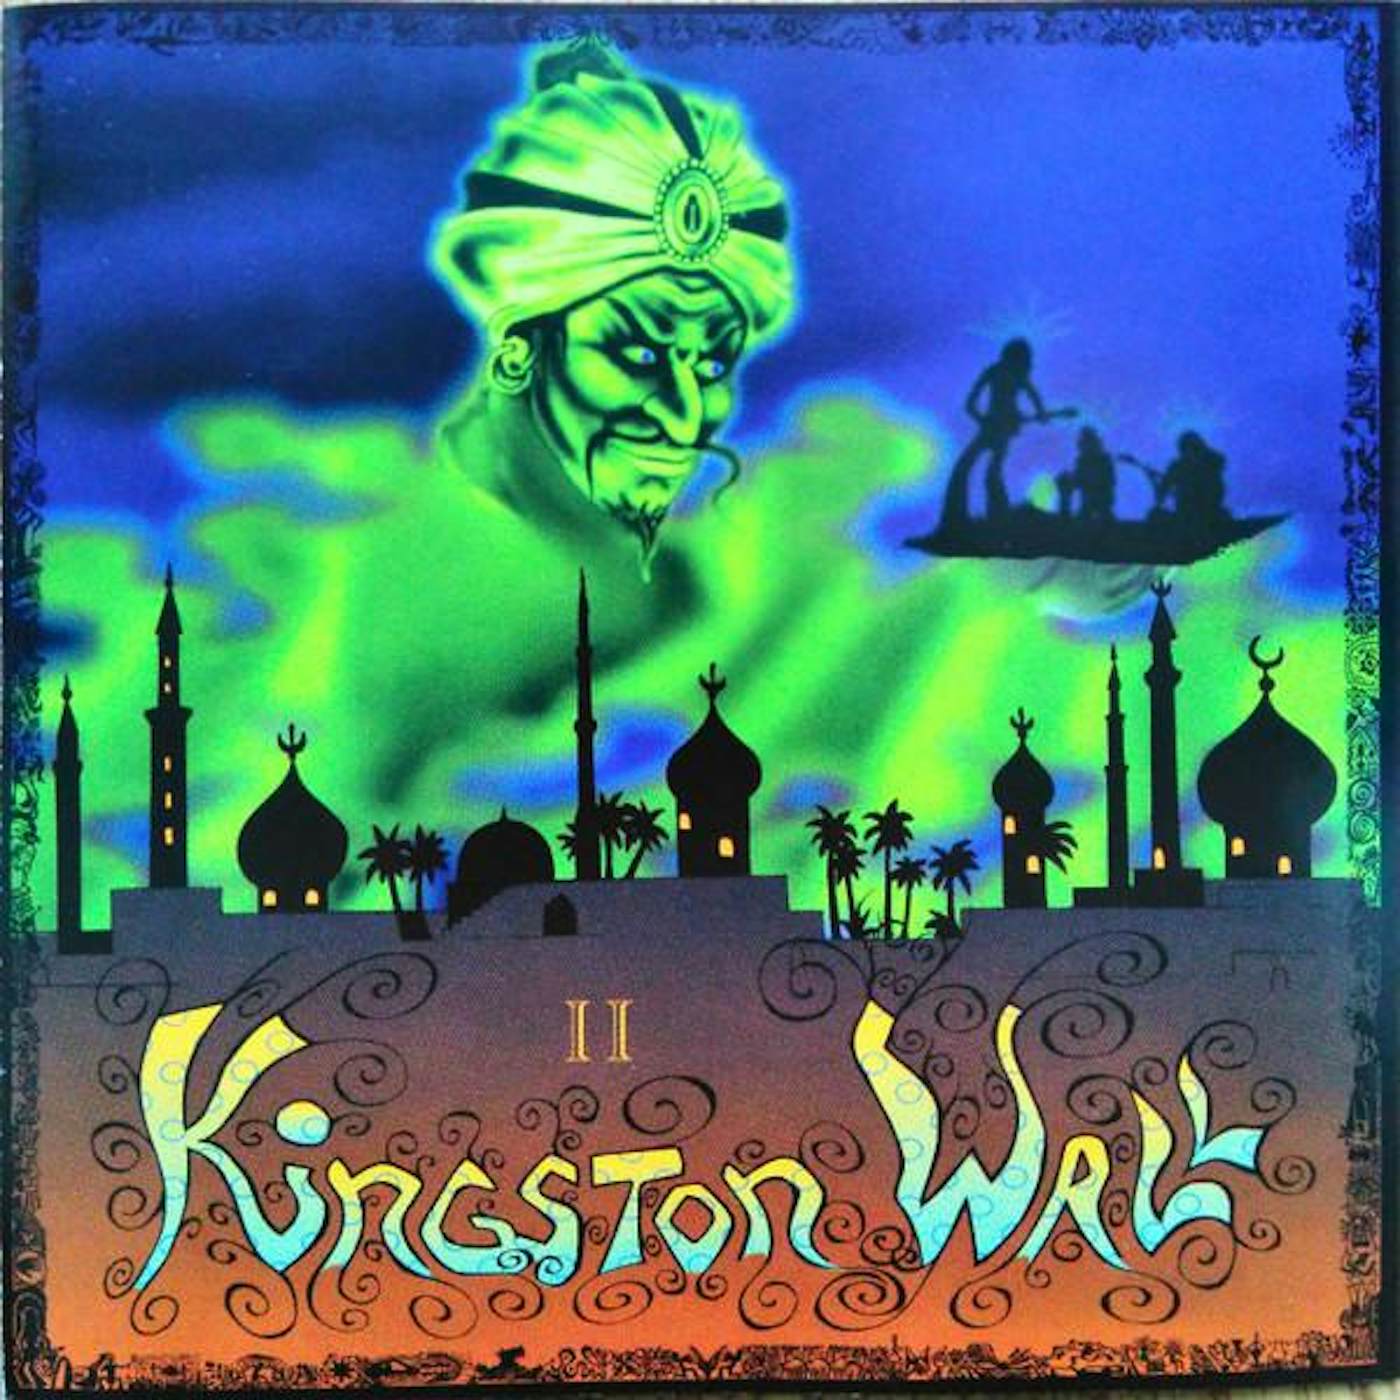 Kingston Wall II CD